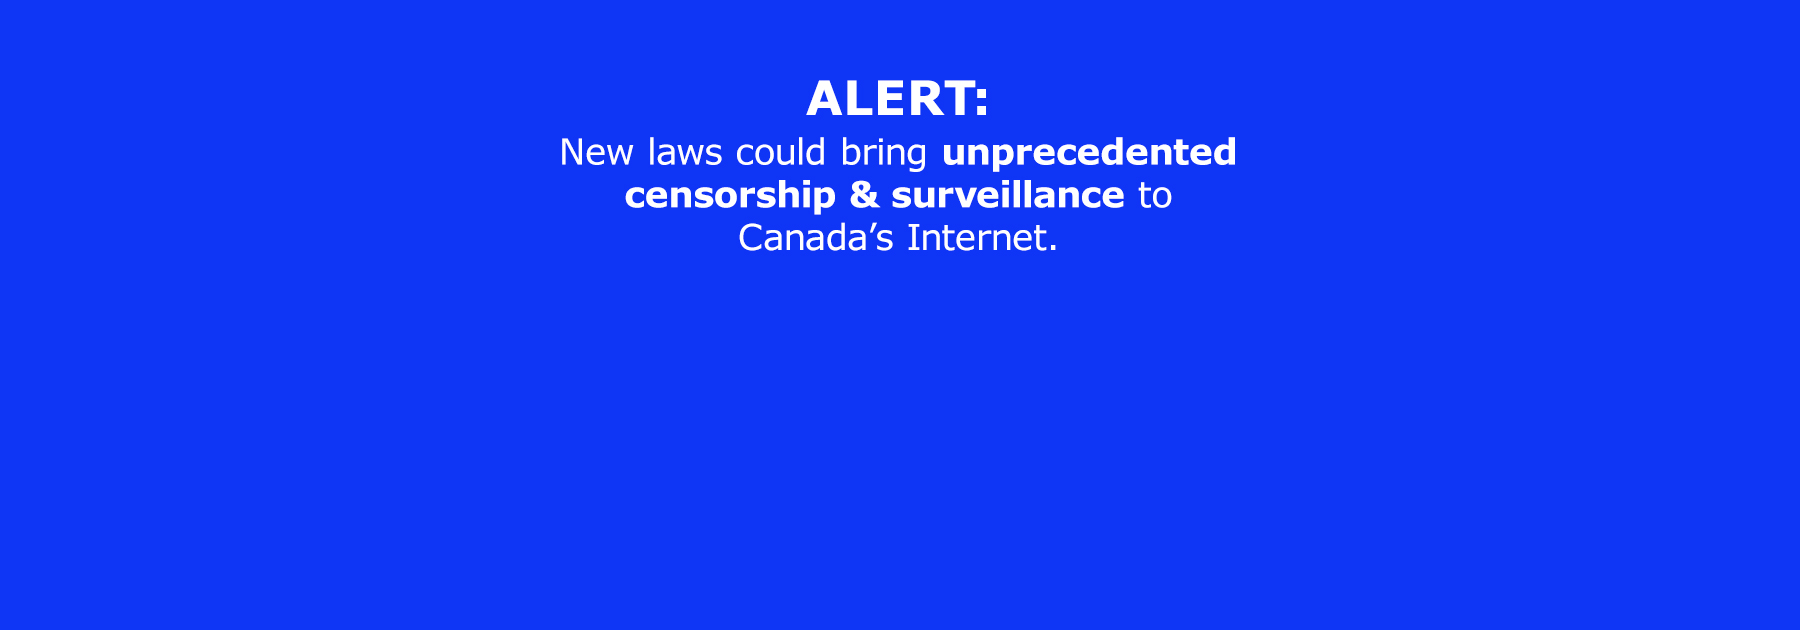 Alert: New laws could bring unprecedented censorship & surveillance to Canada’s Internet.